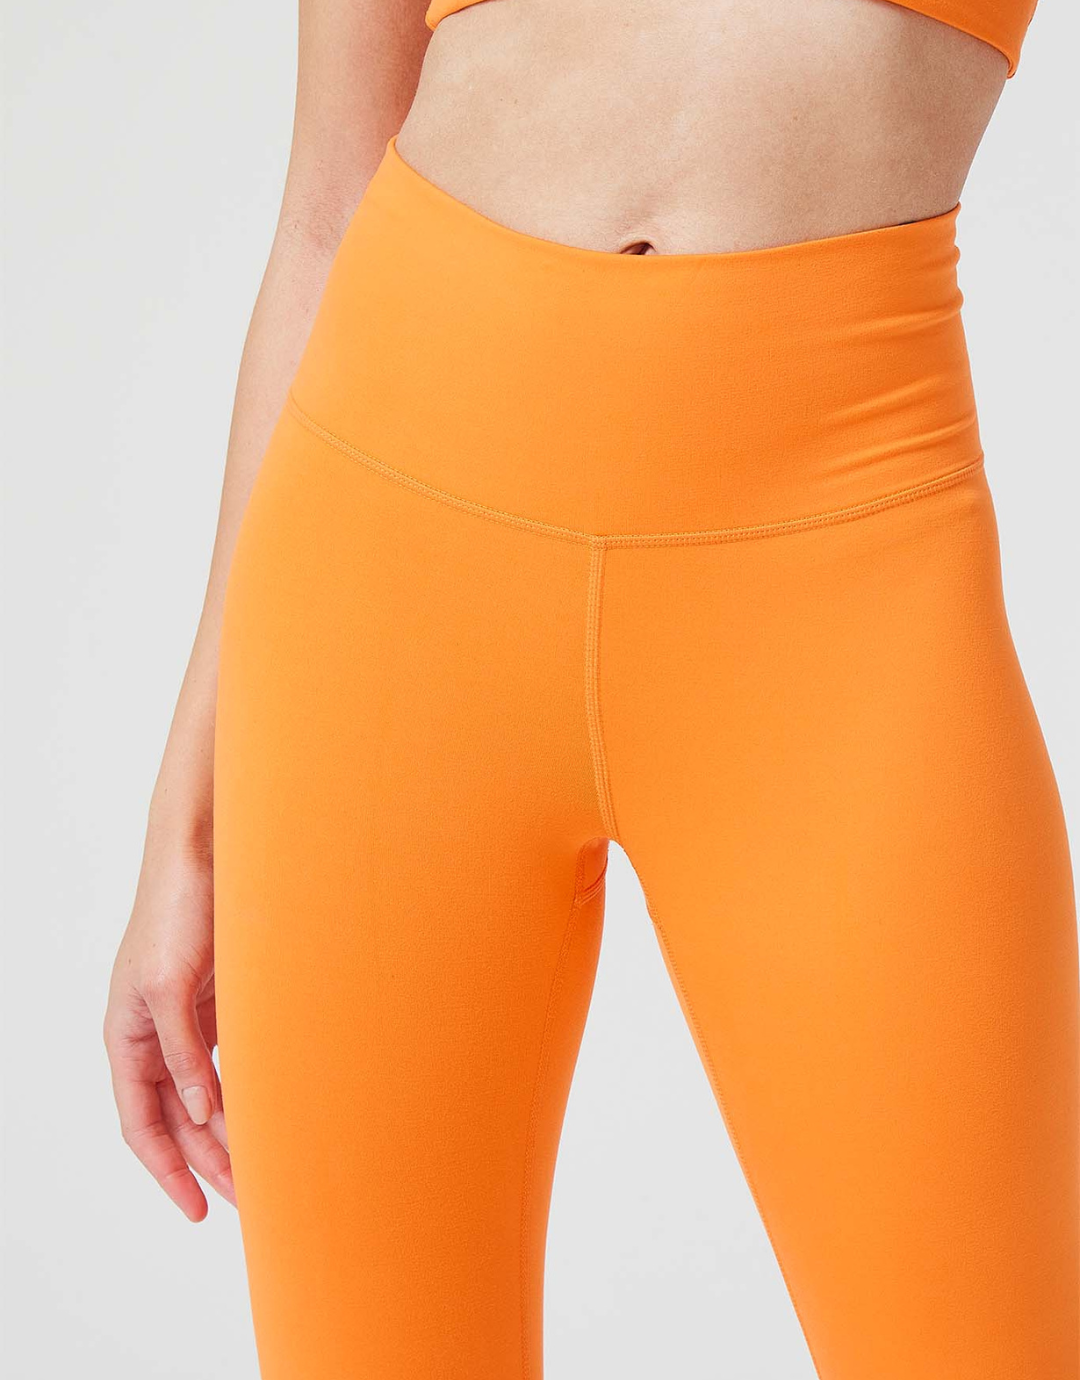 Tangerine Running Tights Women's Gray/Black Used XL - Locker Room Direct